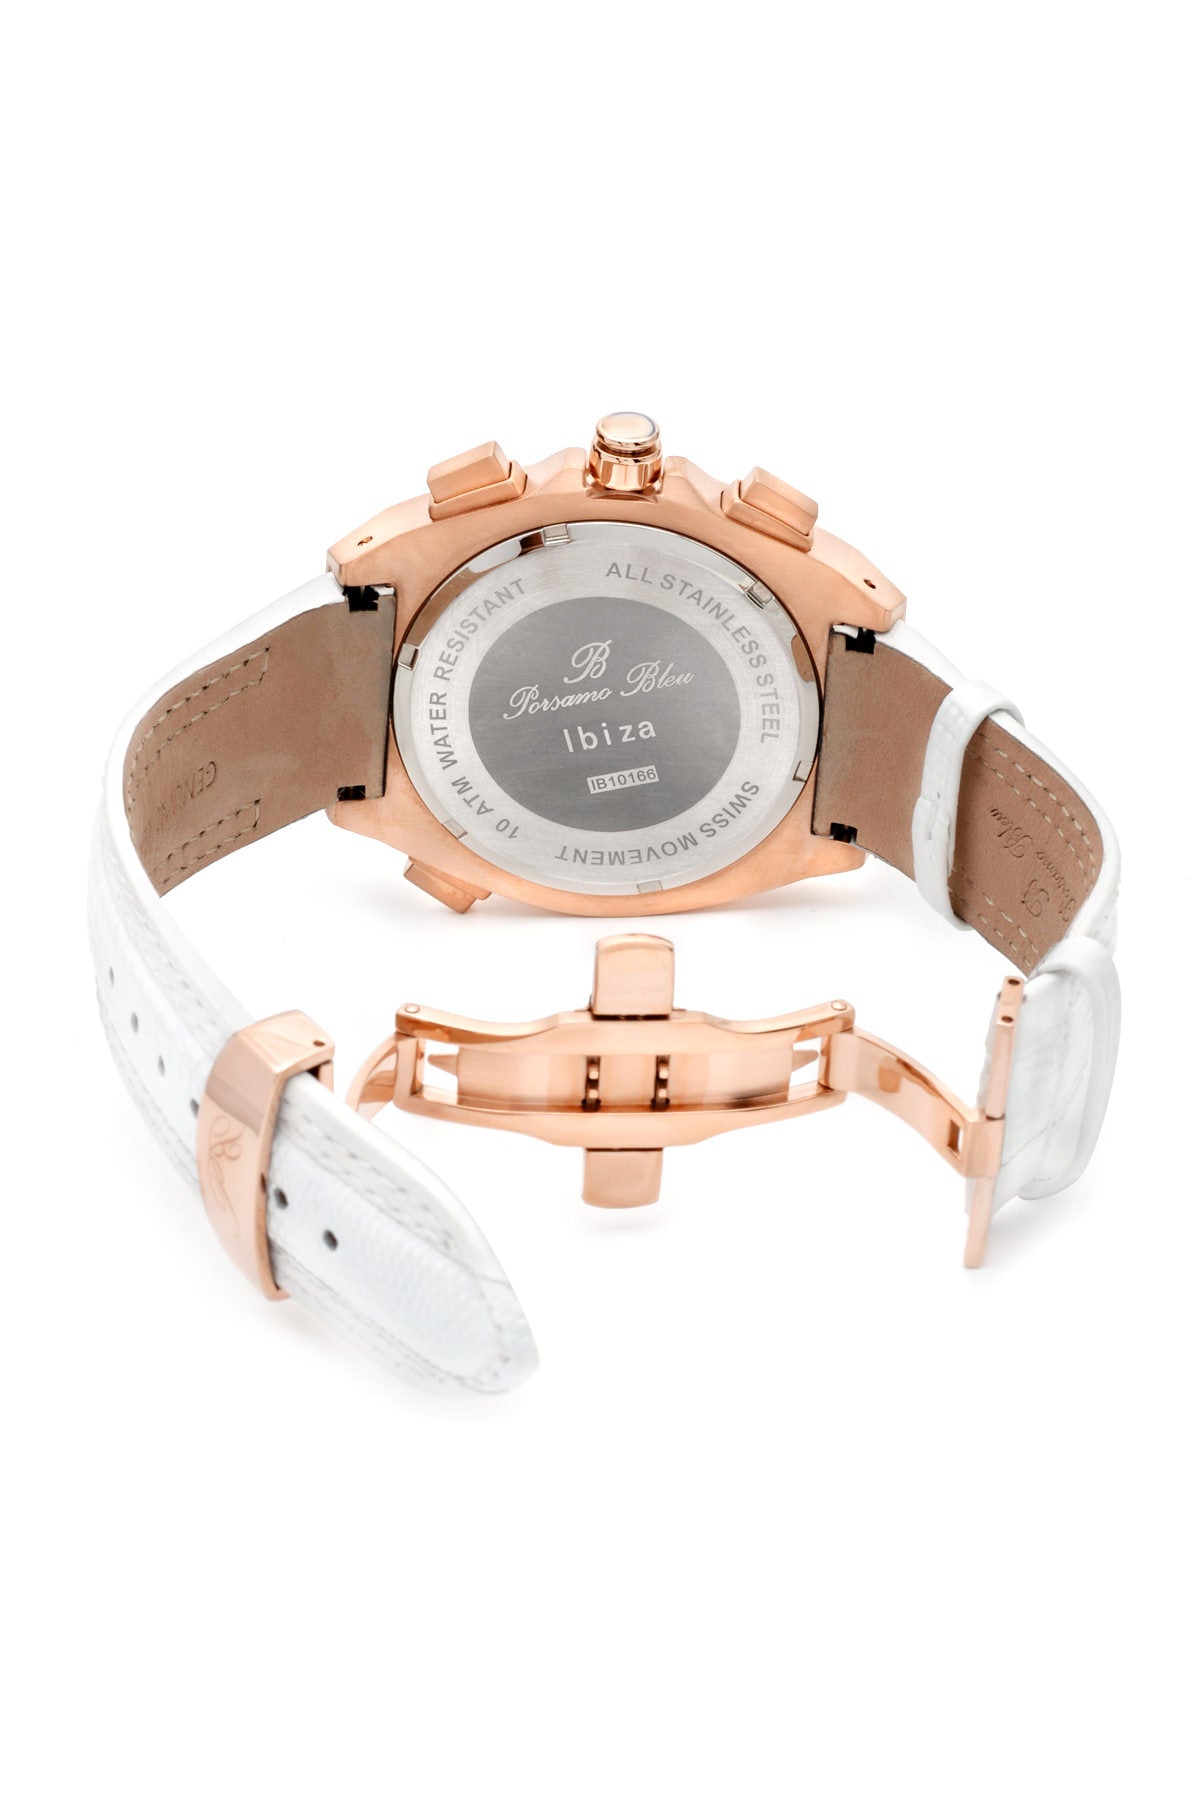 Porsamo Bleu Ibiza luxury chronograph men's watch, genuine leather band, rose, white 123BIBL